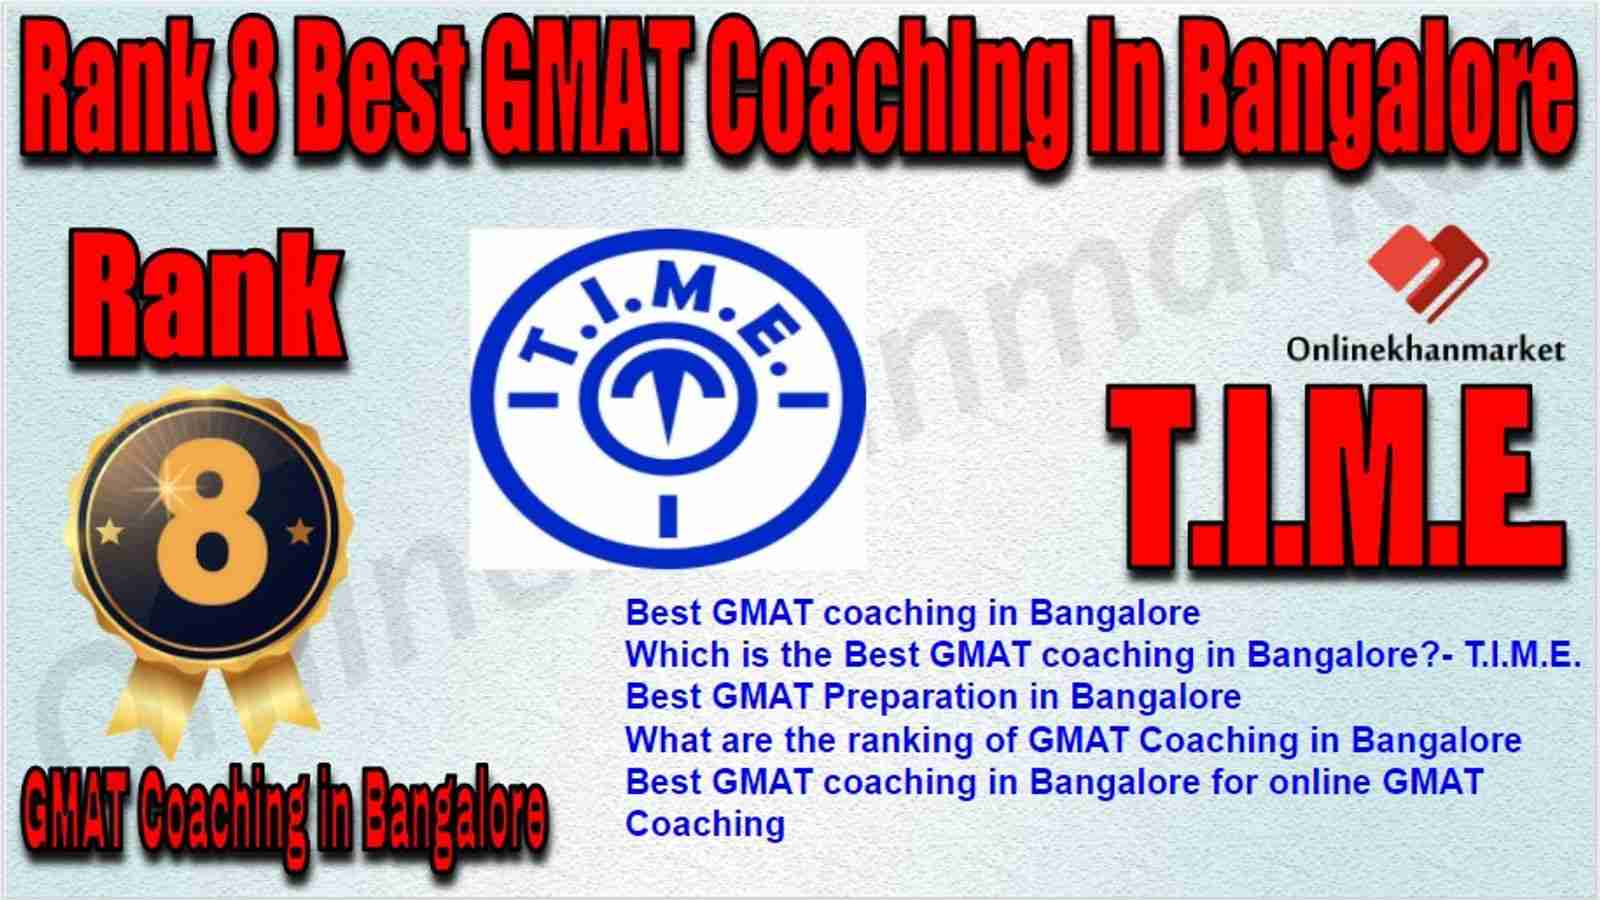 Rank 8 Best GMAT Coaching in Bangalore